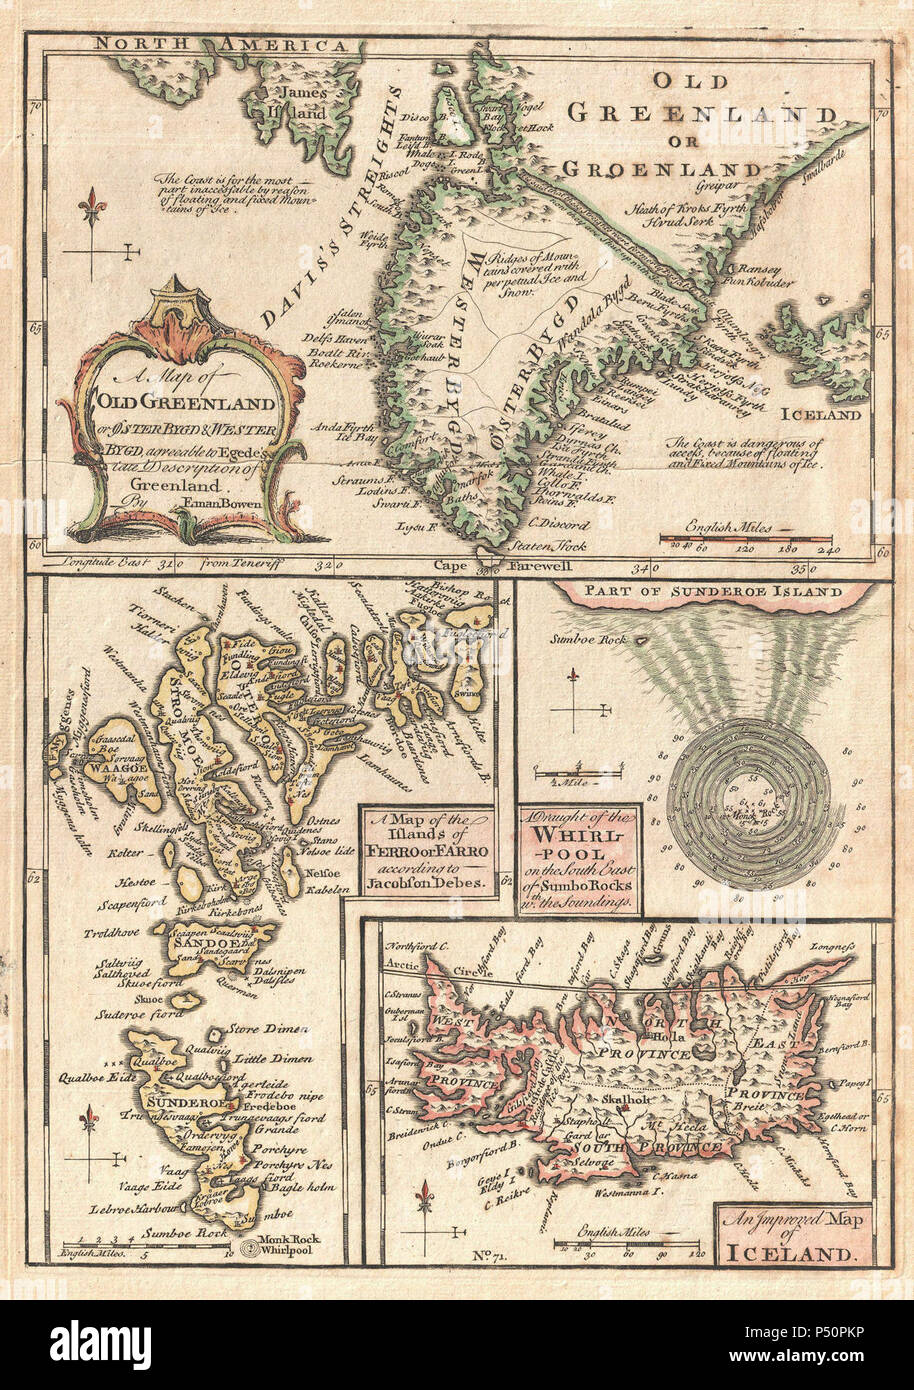 1747 Bowen Map of the North Atlantic Islands, Greenland, Iceland, Faroe Islands (Maelstrom) - Geographicus - OldGreenland-bowen-1747. Stock Photo